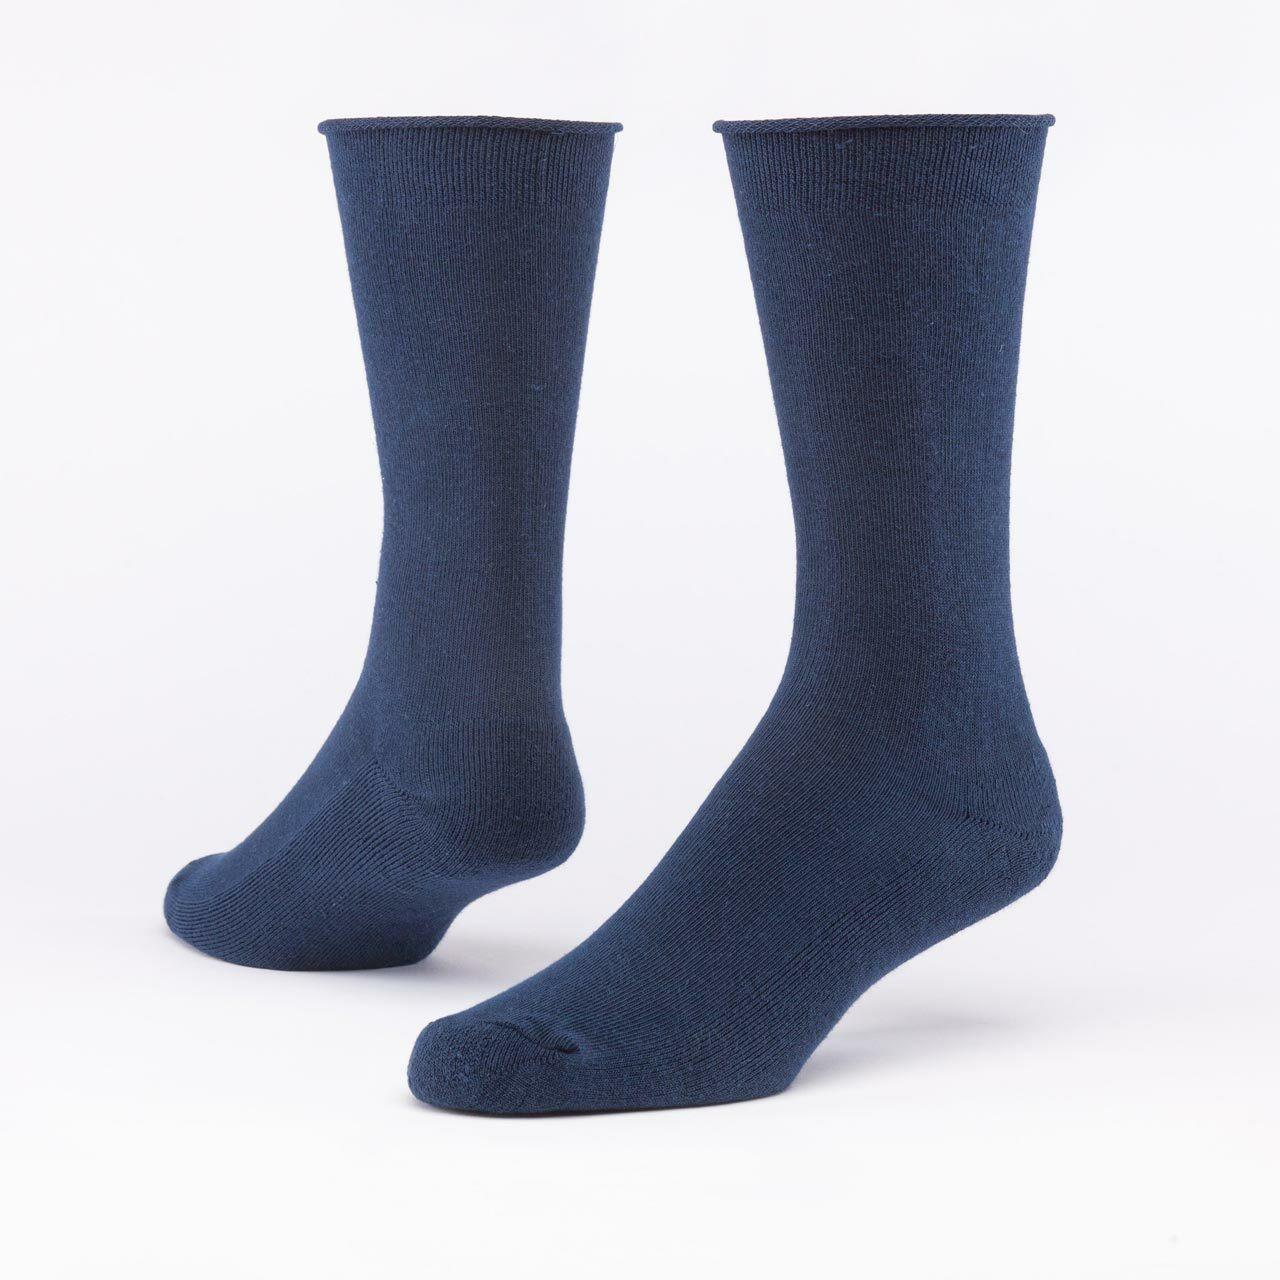 Cushioned Socks - Crew Sock - Socks With Pads